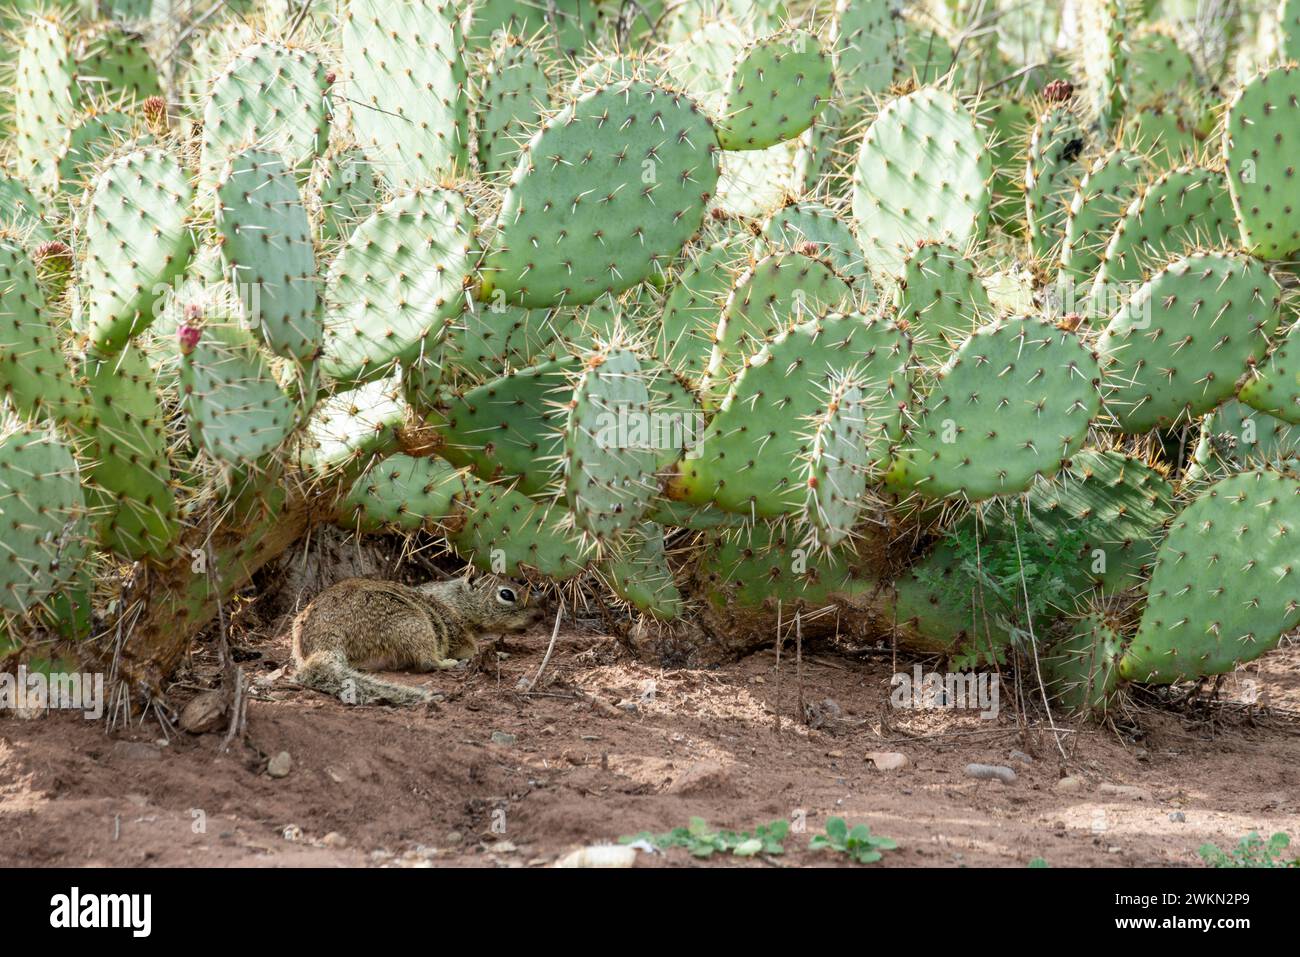 Laguna Beach, California. Laguna Coast Wilderness Park. California Ground Squirrel, Otospermophilus beecheyi hiding under cactus leaves Stock Photo